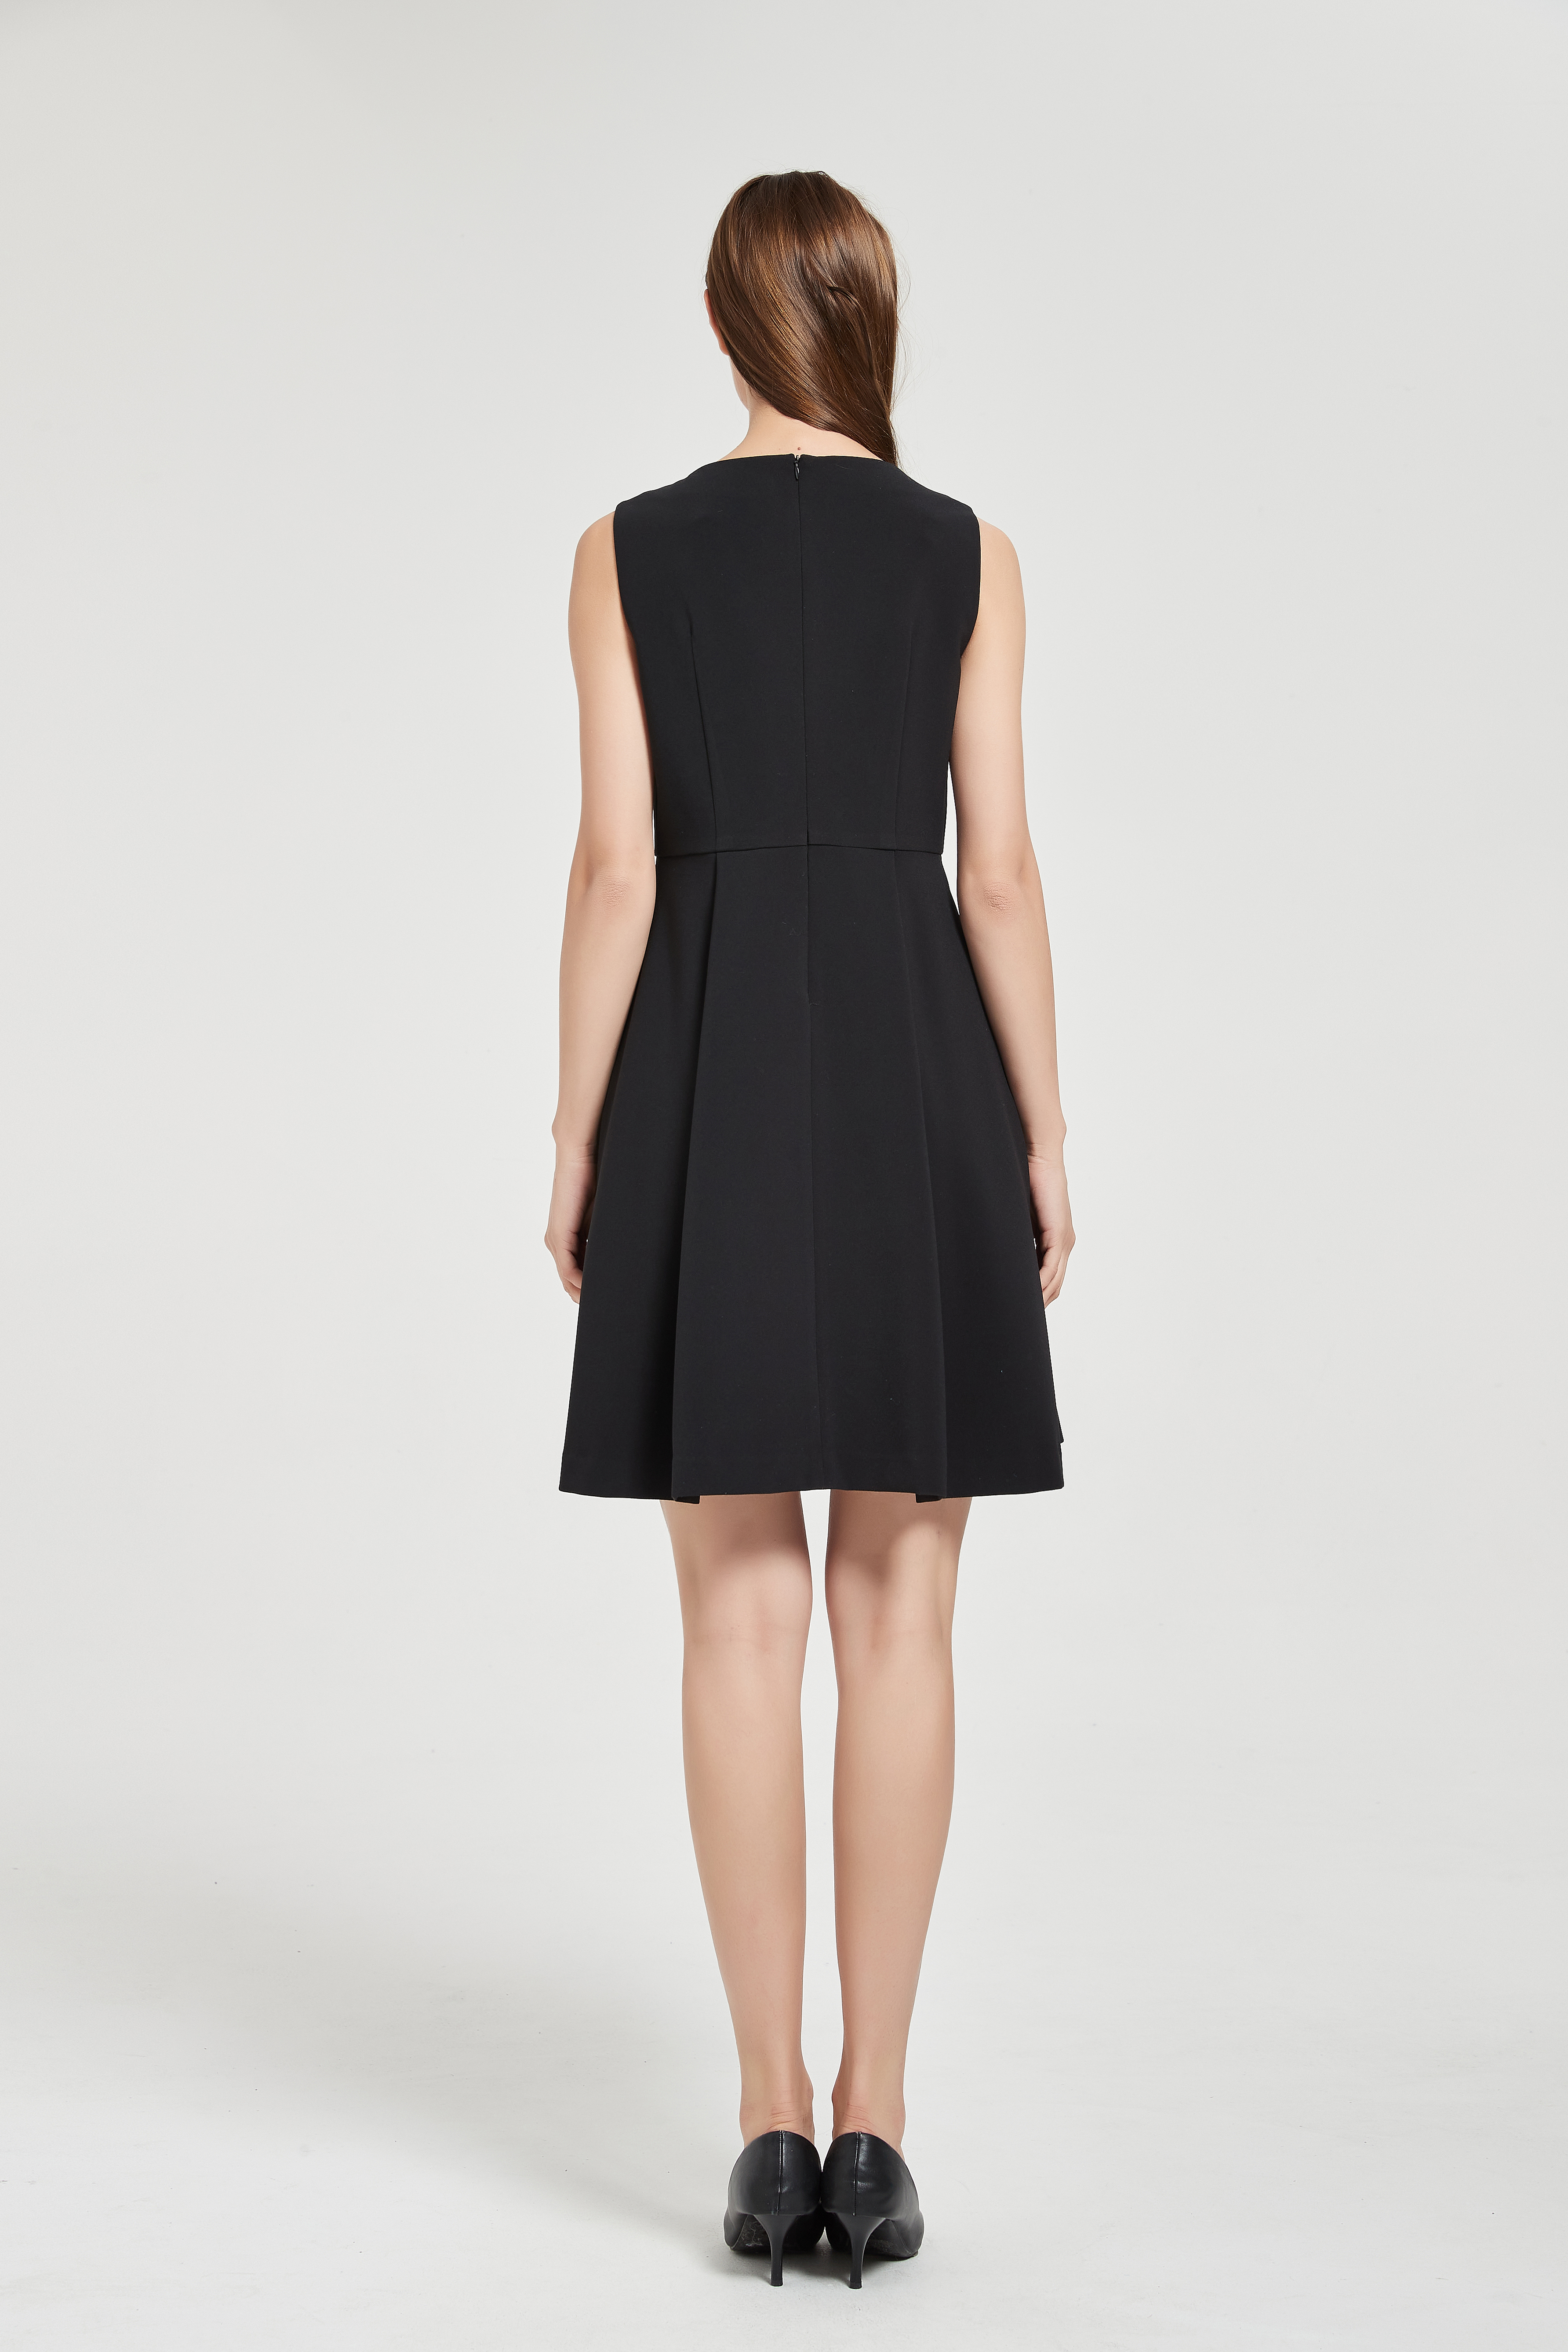 Women's Black Embroidery Sleeveless Dress